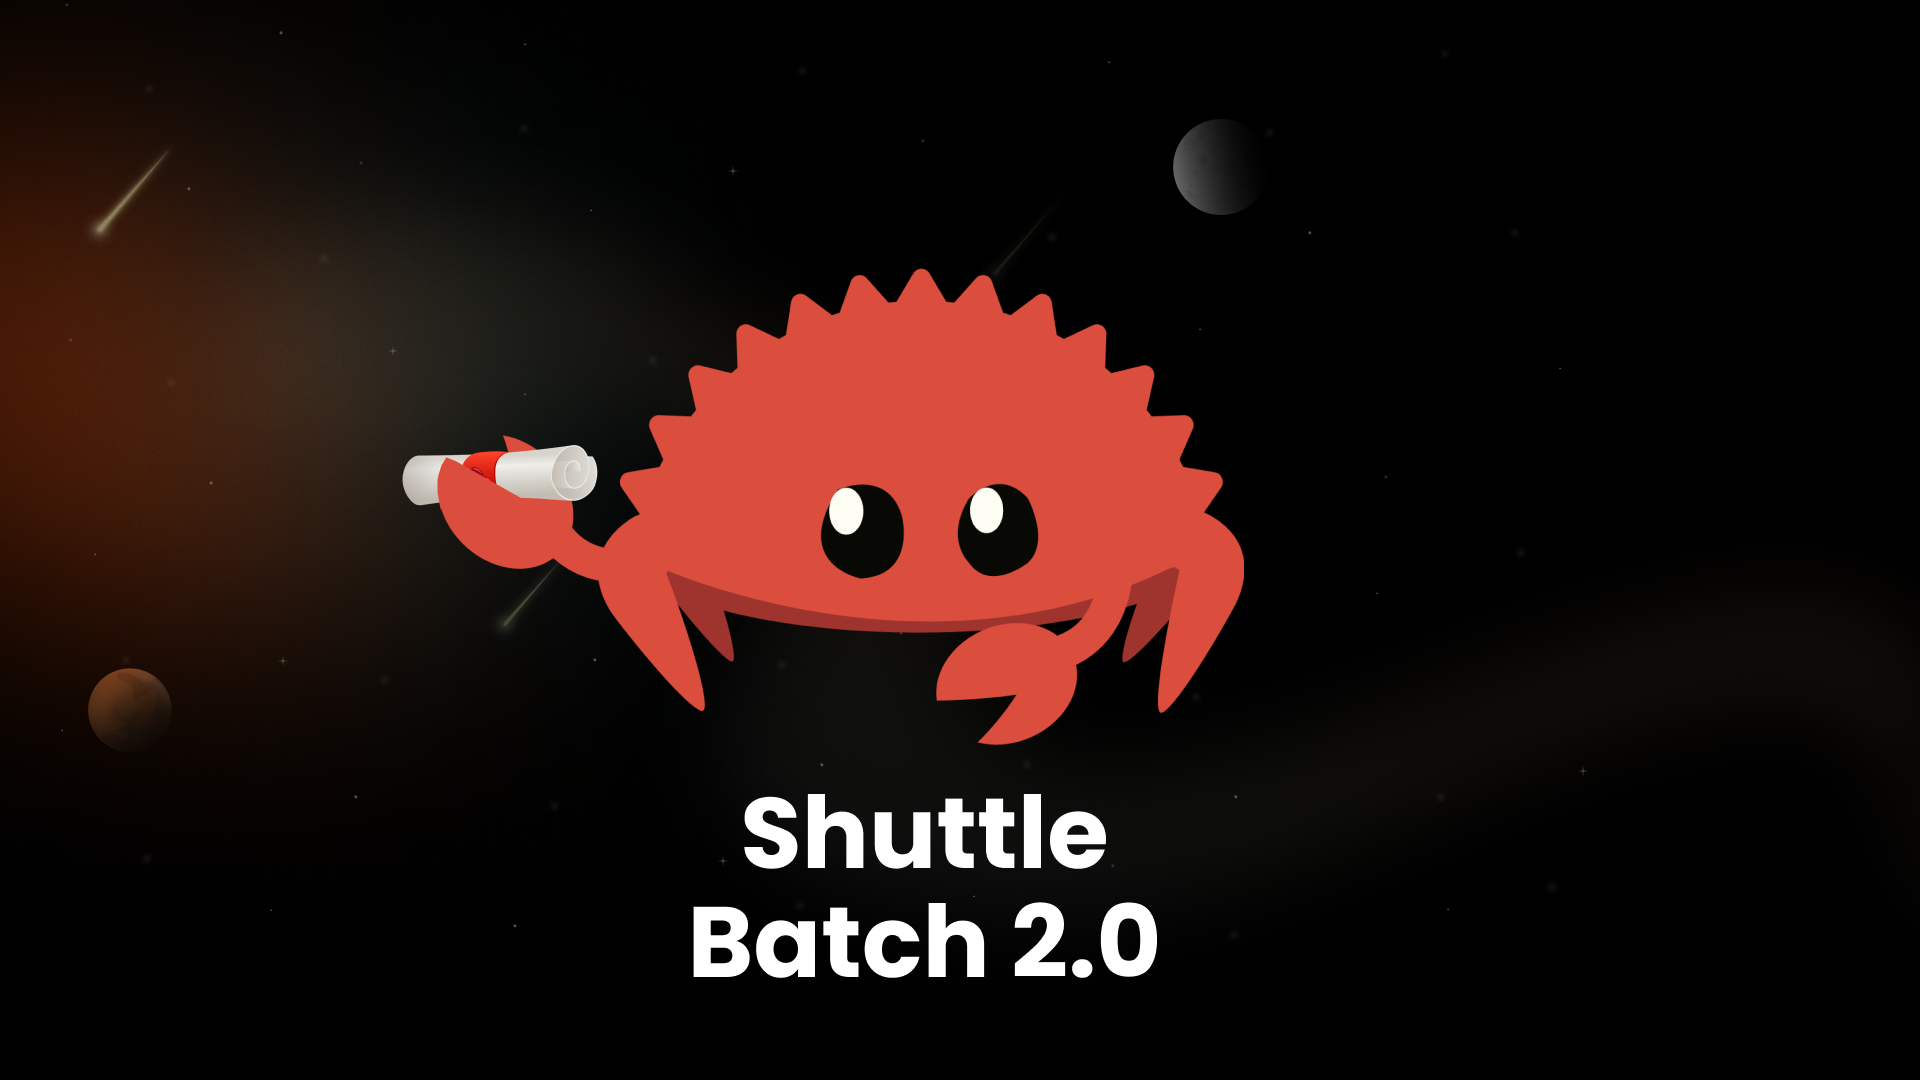 Introducing Shuttle Batch 2.0